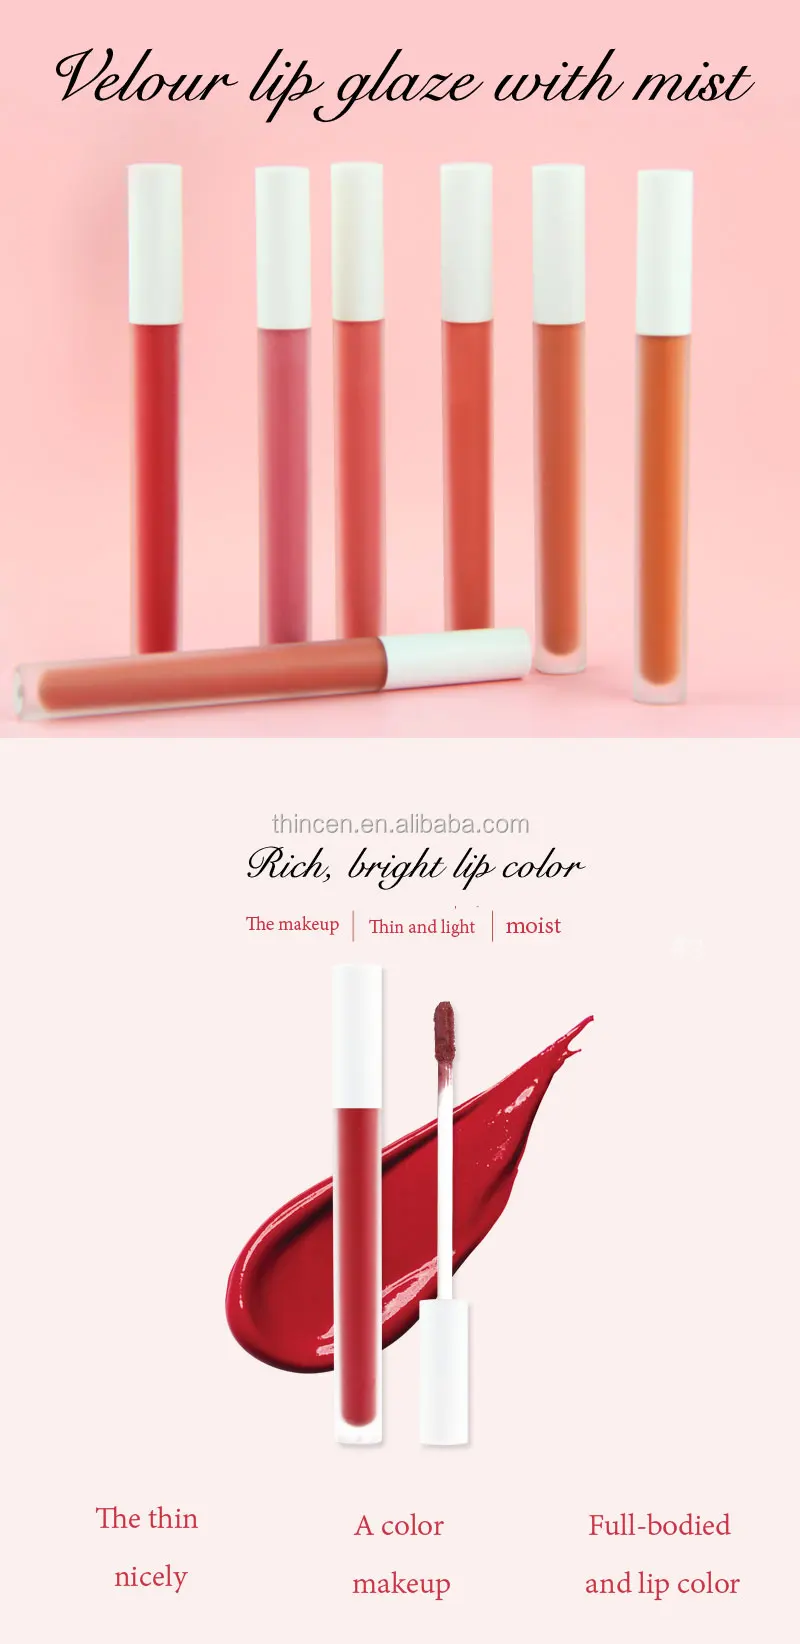 High Quality Labial Glair Matte Velvet Liquid Lipstick Private Label